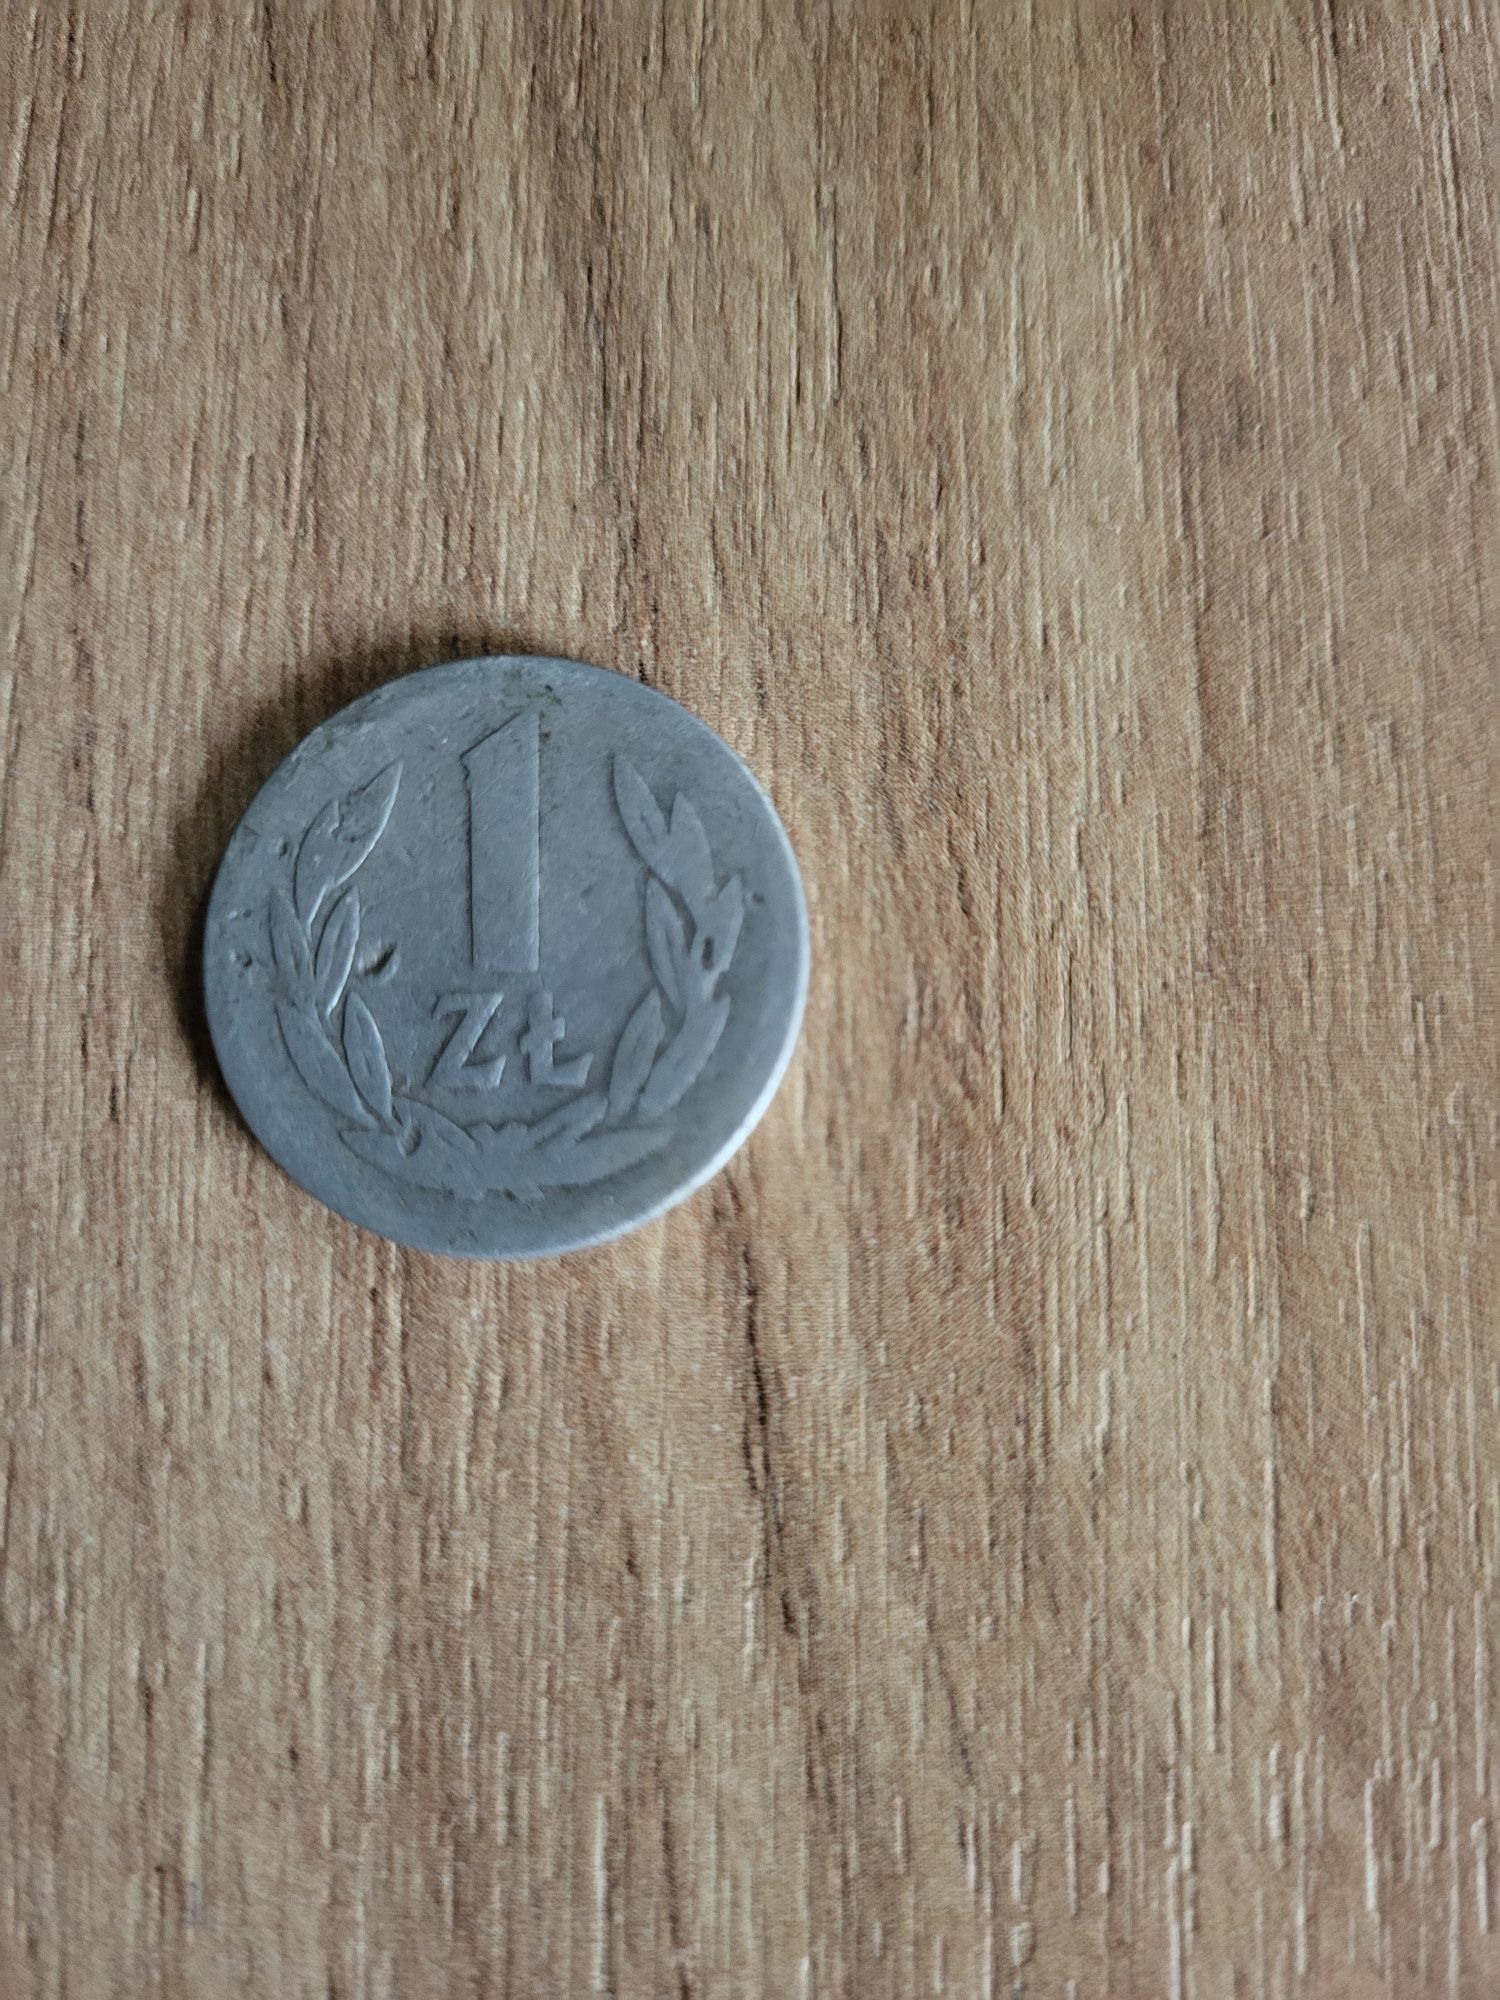 Moneta 1zl z 1949r